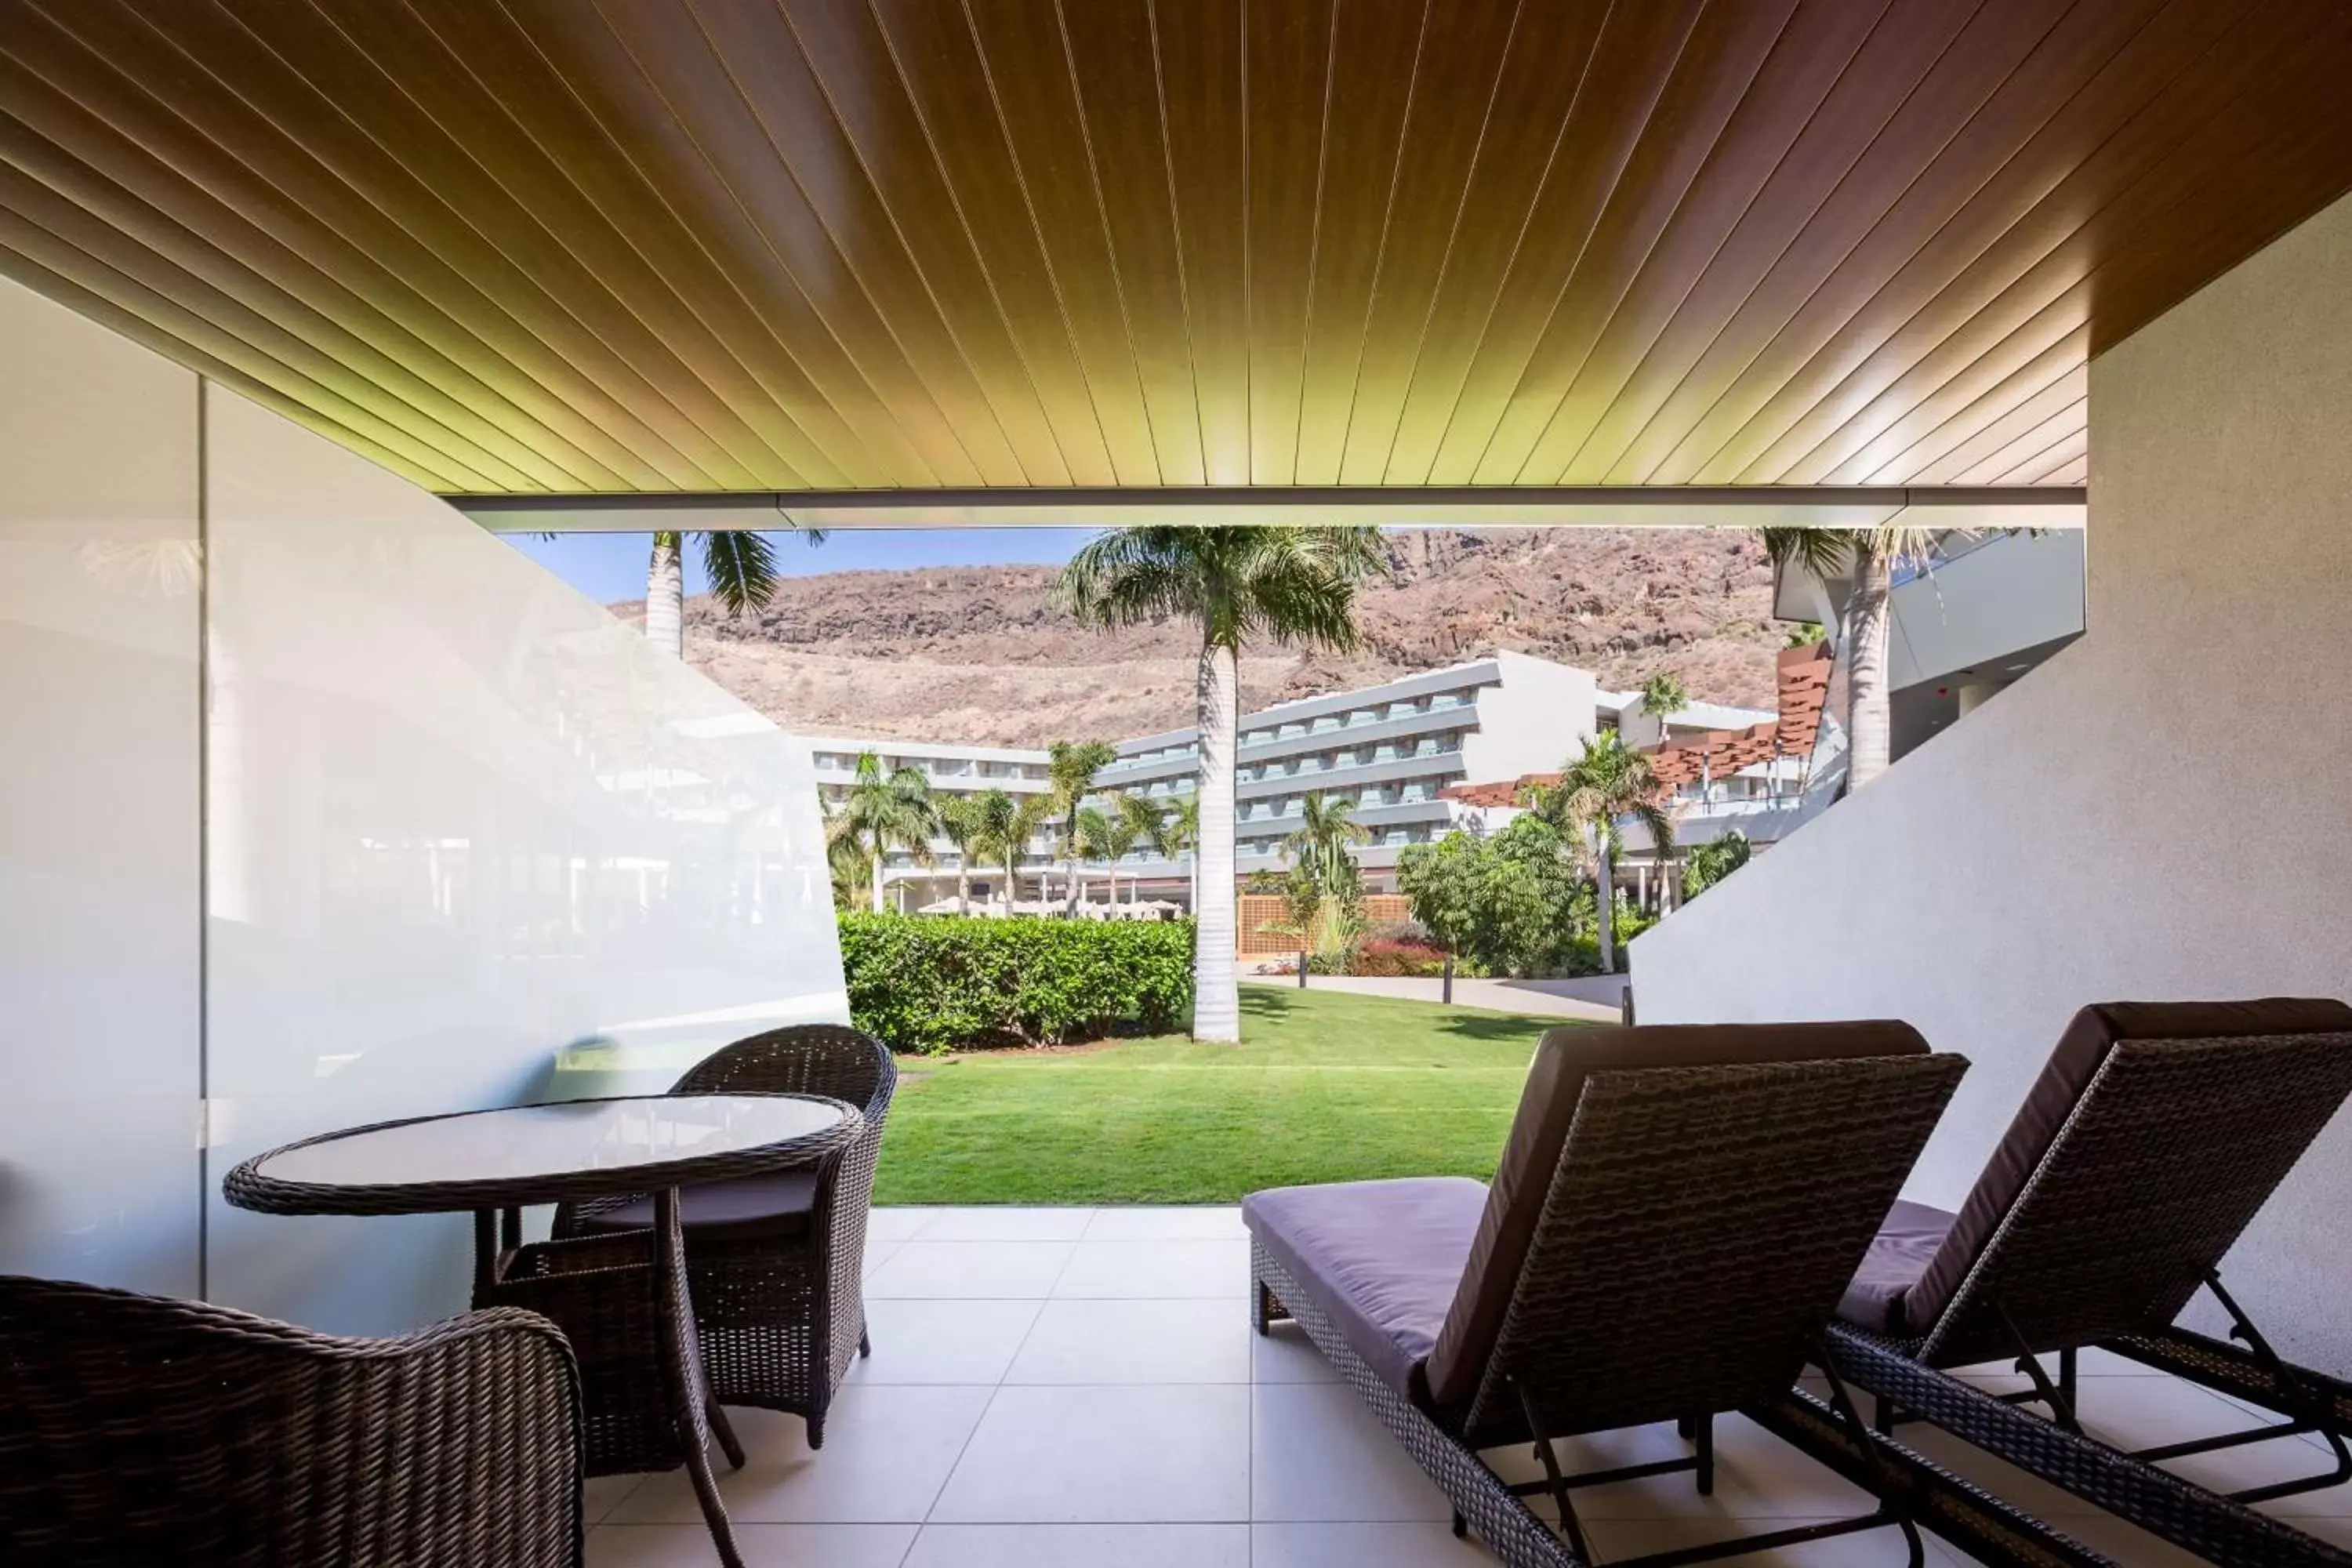 Photo of the whole room in Radisson Blu Resort & Spa, Gran Canaria Mogan